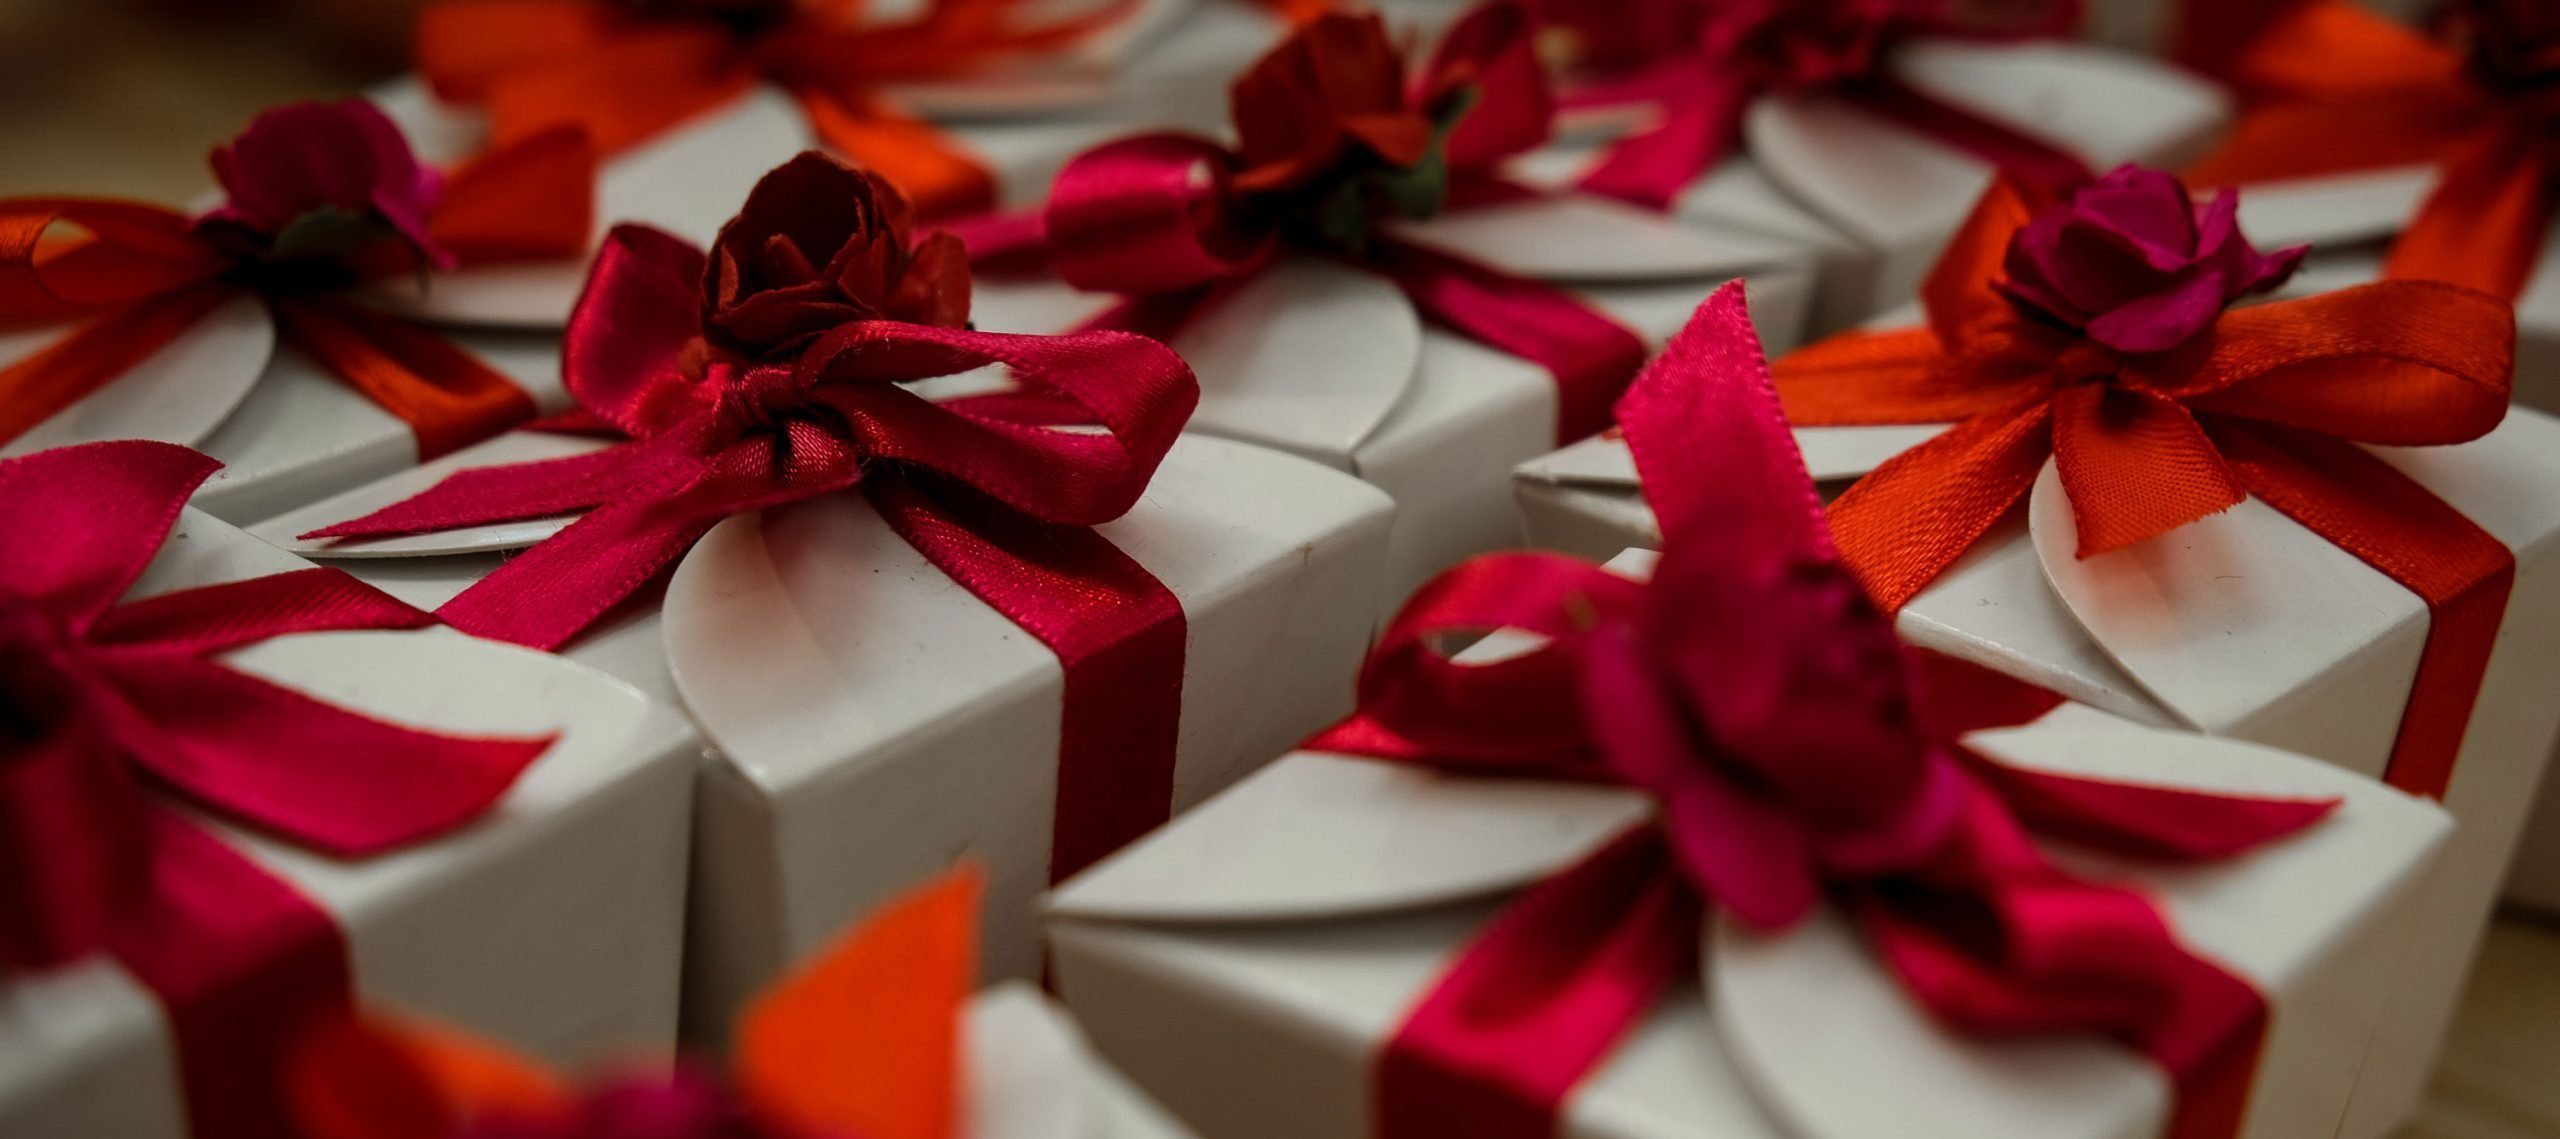 Large Kraft Gift Box by Celebrate It™ | Michaels